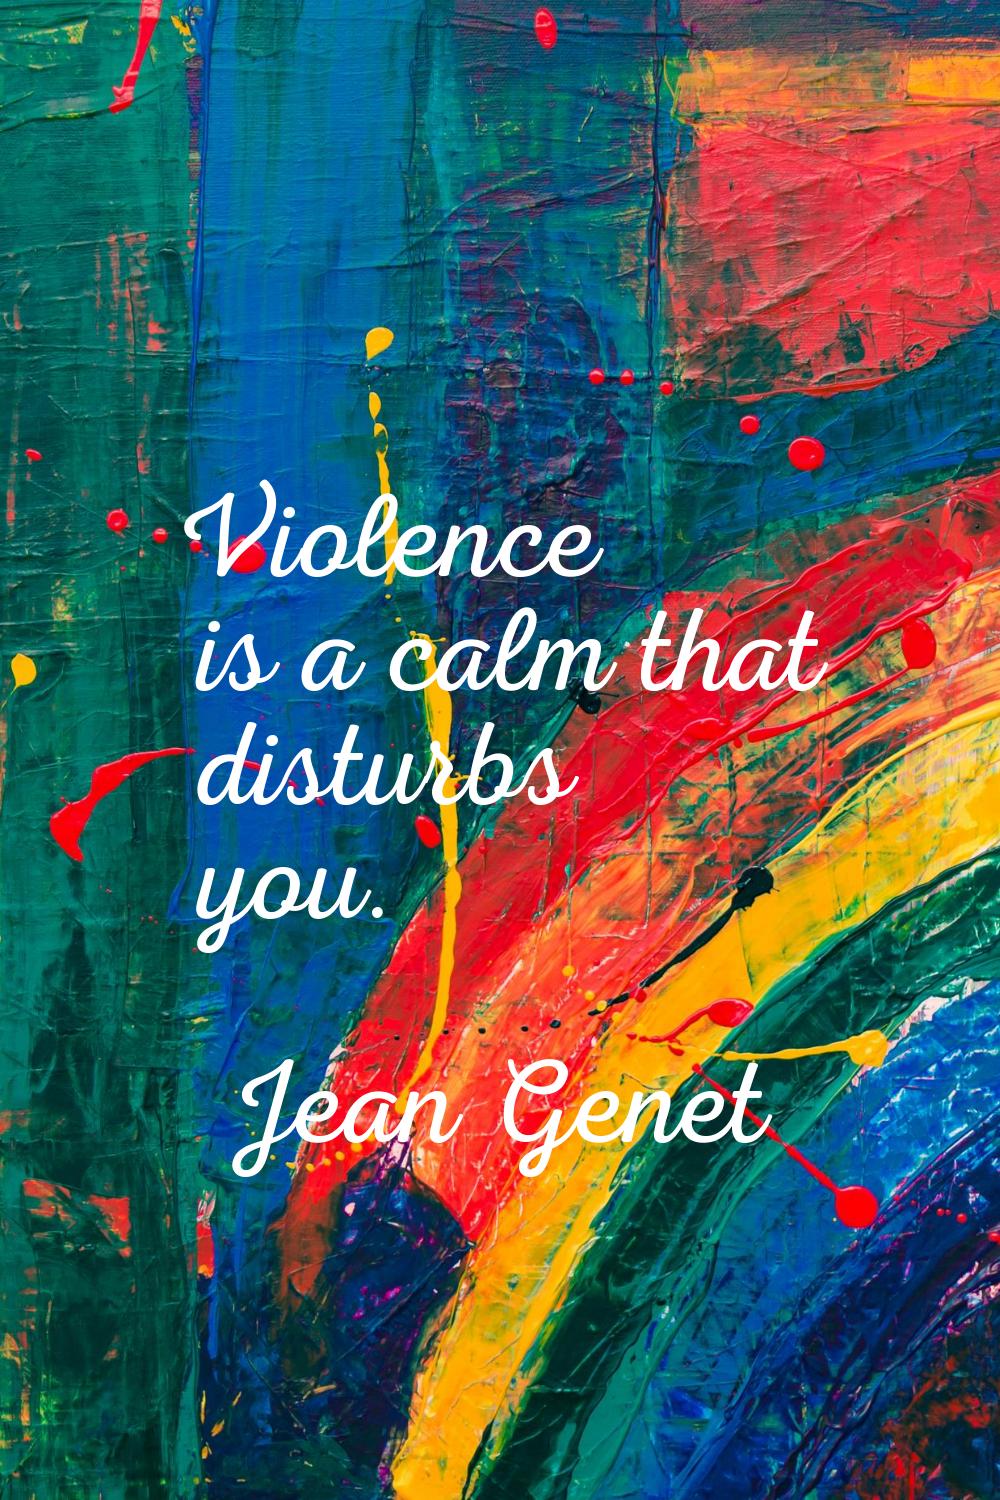 Violence is a calm that disturbs you.